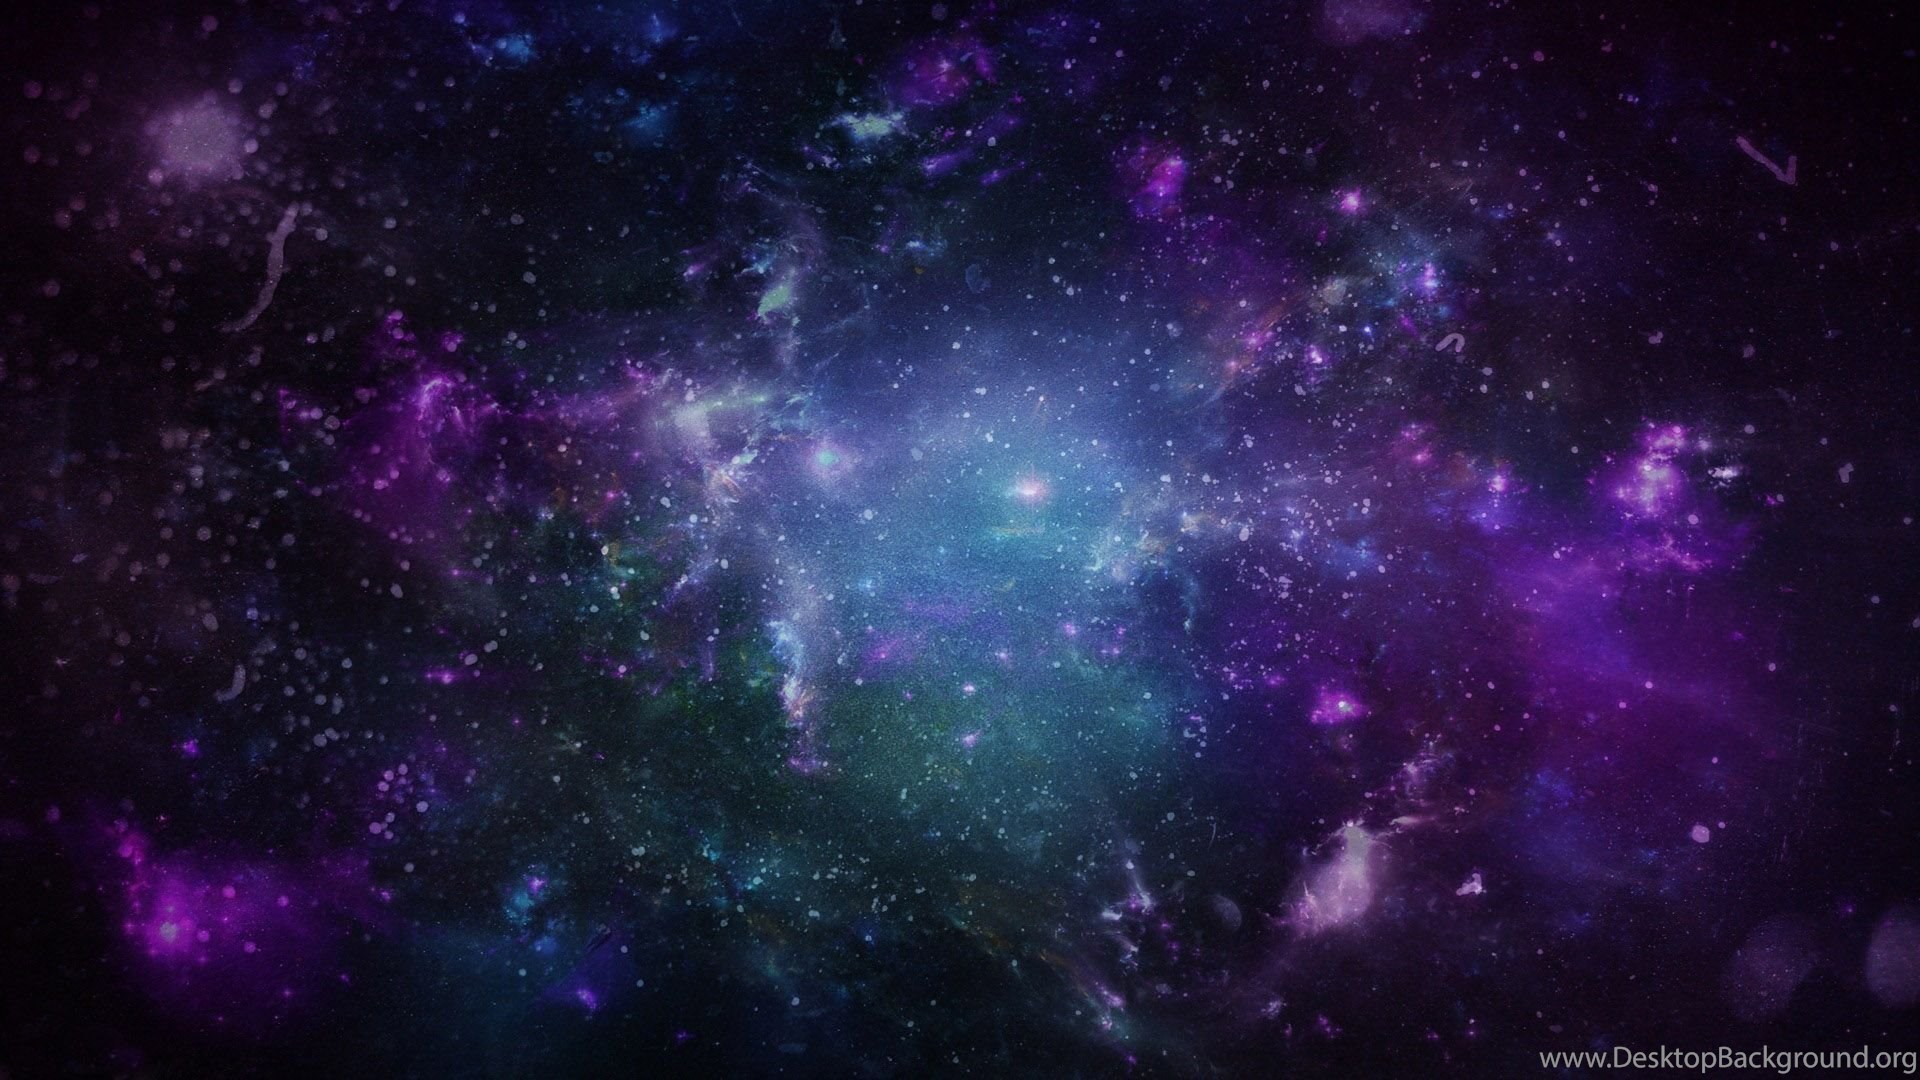 1080 Dark Galaxy Hd Wallpapers Cool Wallpapers Desktop Background